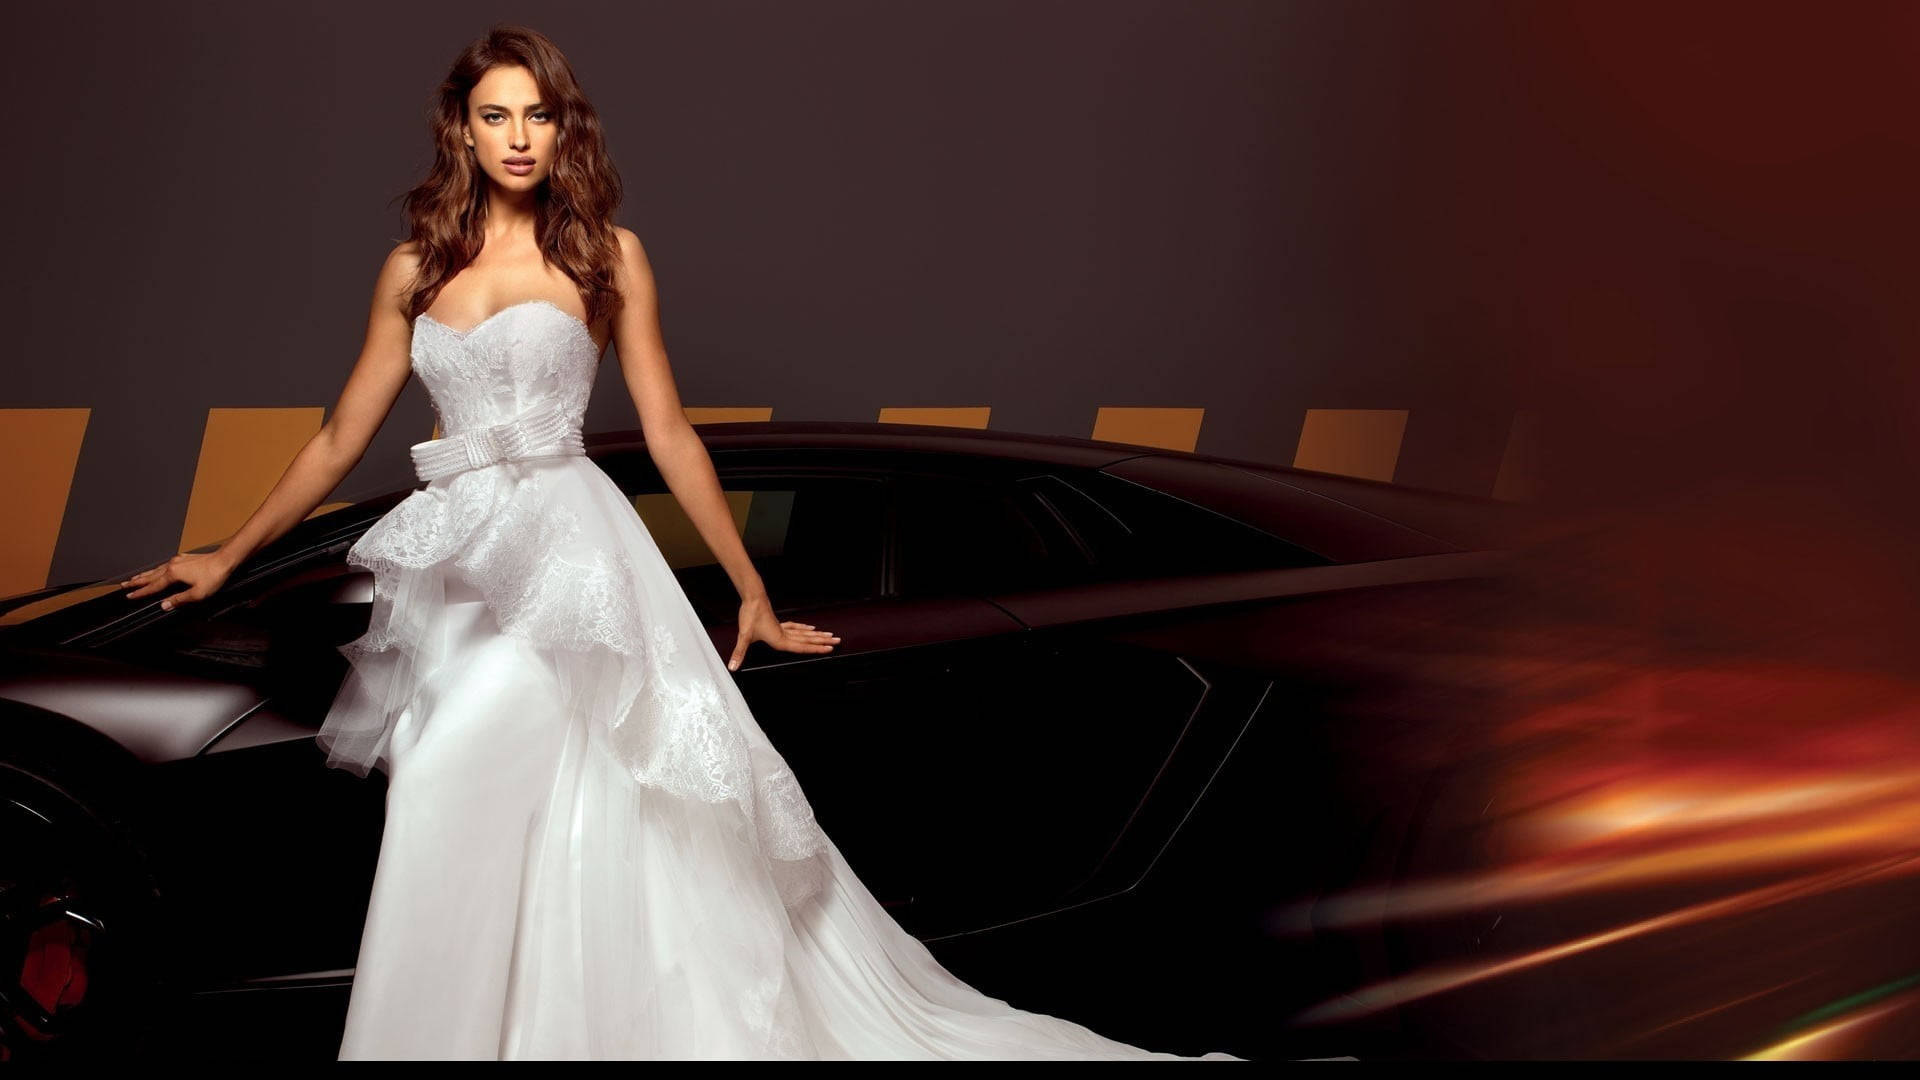 Black Car And Wedding Dress Background